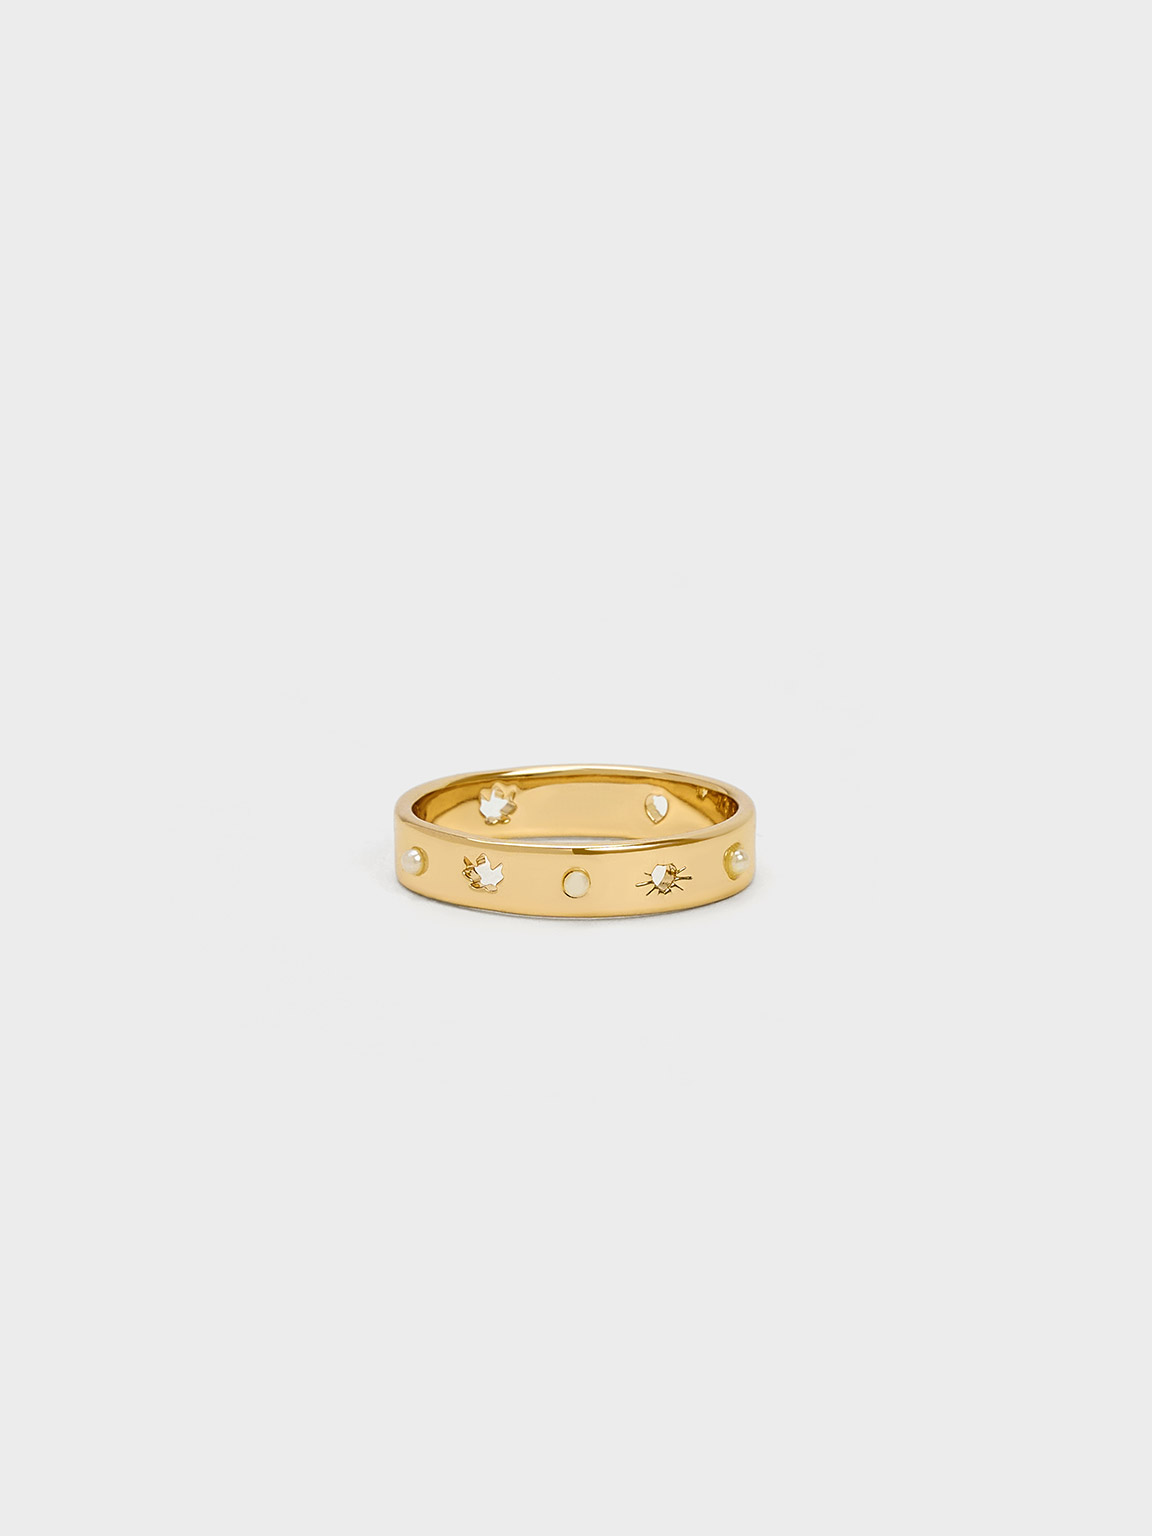 Louis Vuitton Empreinte Ring, Pink Gold and Diamonds. Size 49